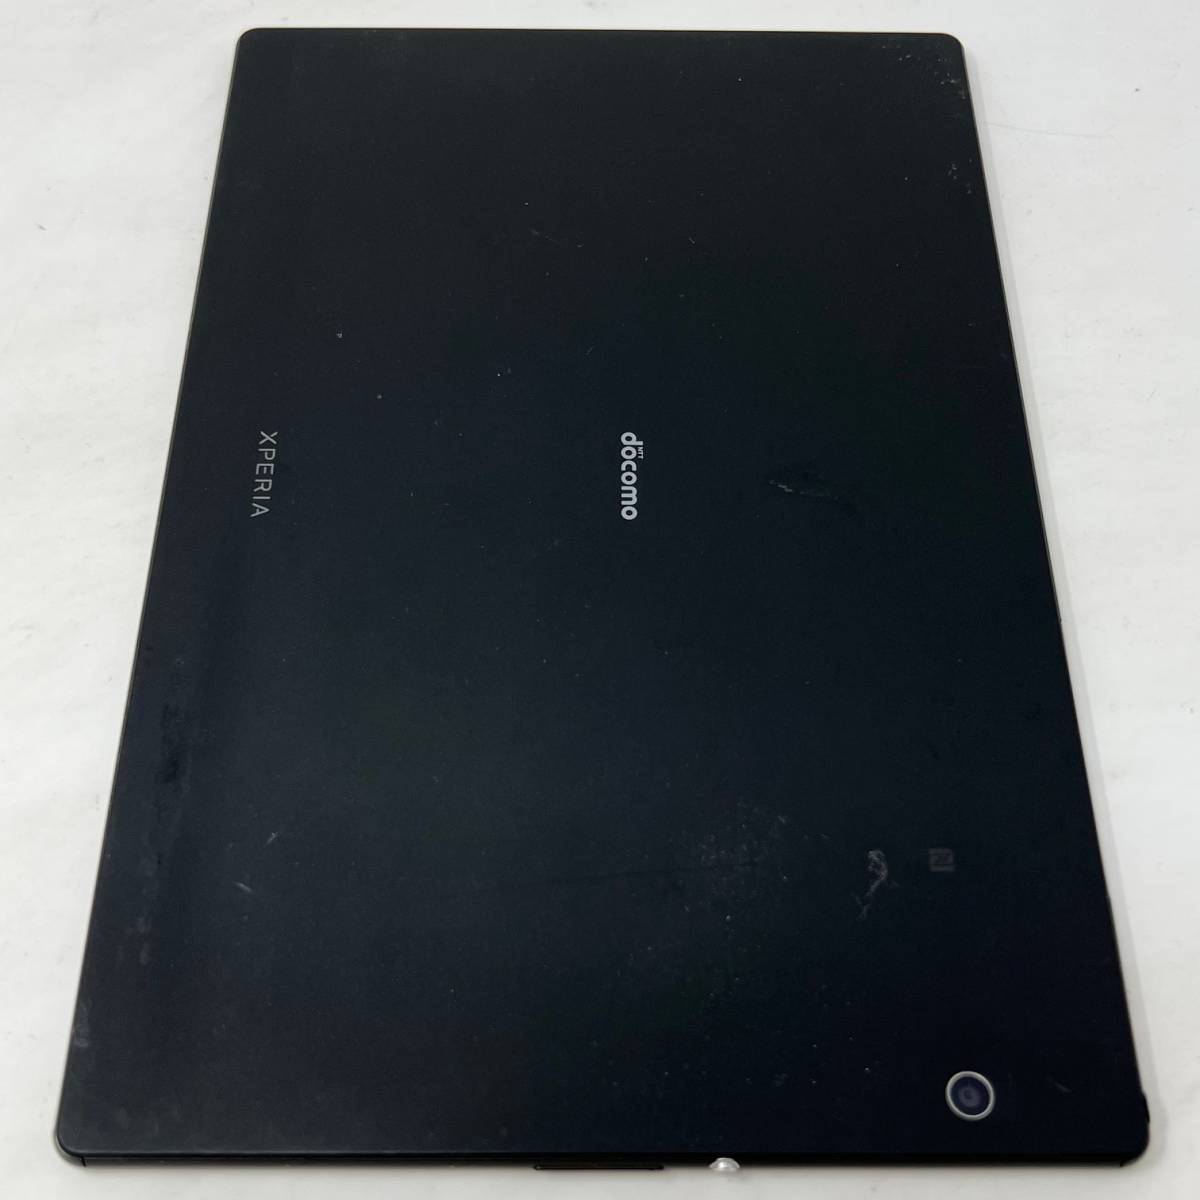 Simフリー Xperia Z4 Tablet So 05g ホワイト 判定 Sony Simロック解除済 の商品詳細 日本のオークション ショッピングサイトの代理入札 購入 From Japan